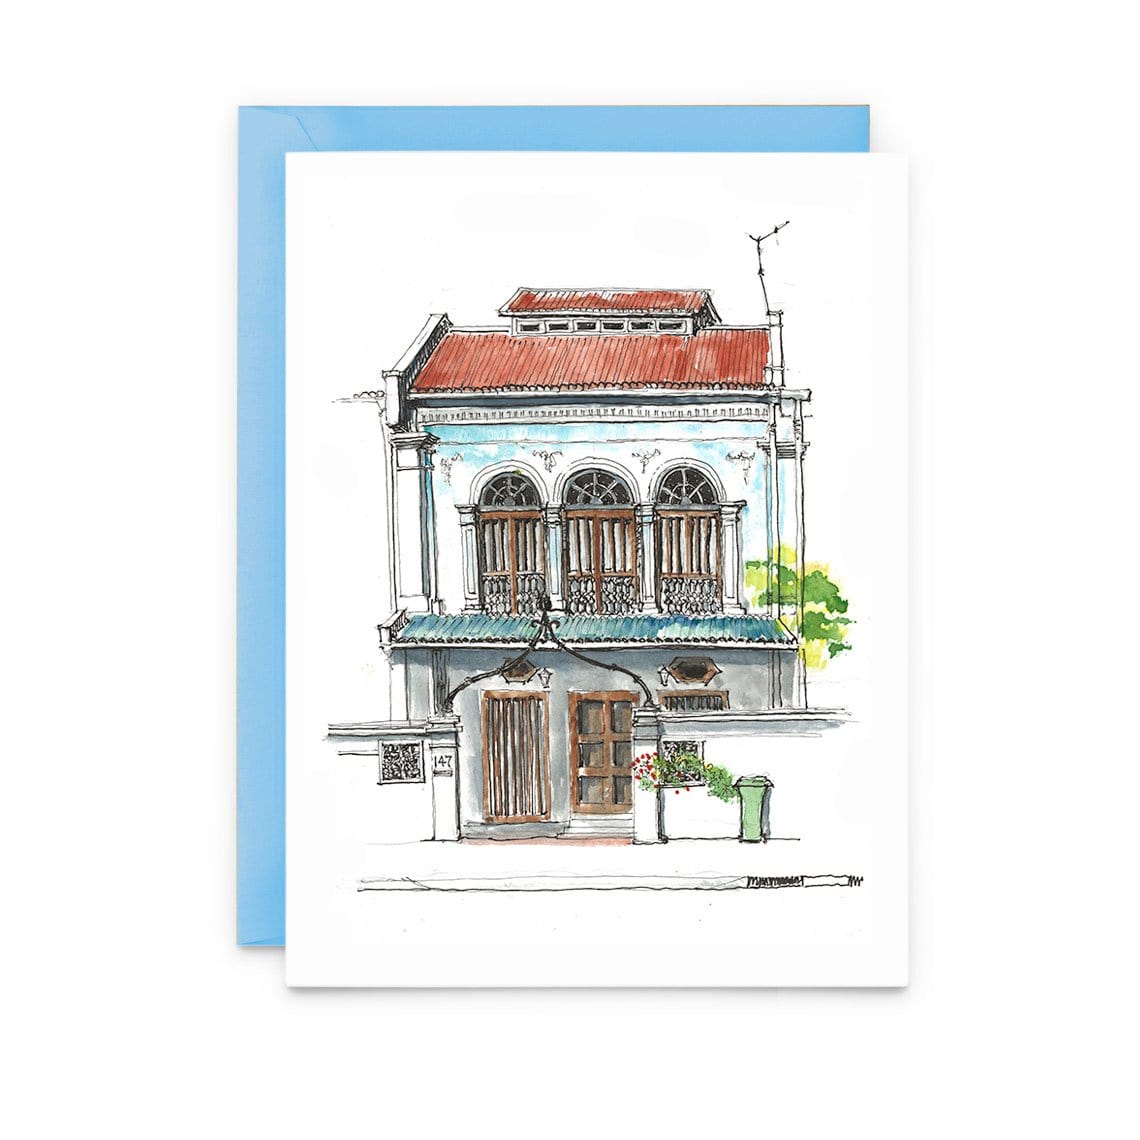 Neil Road Turquoise Shophouse